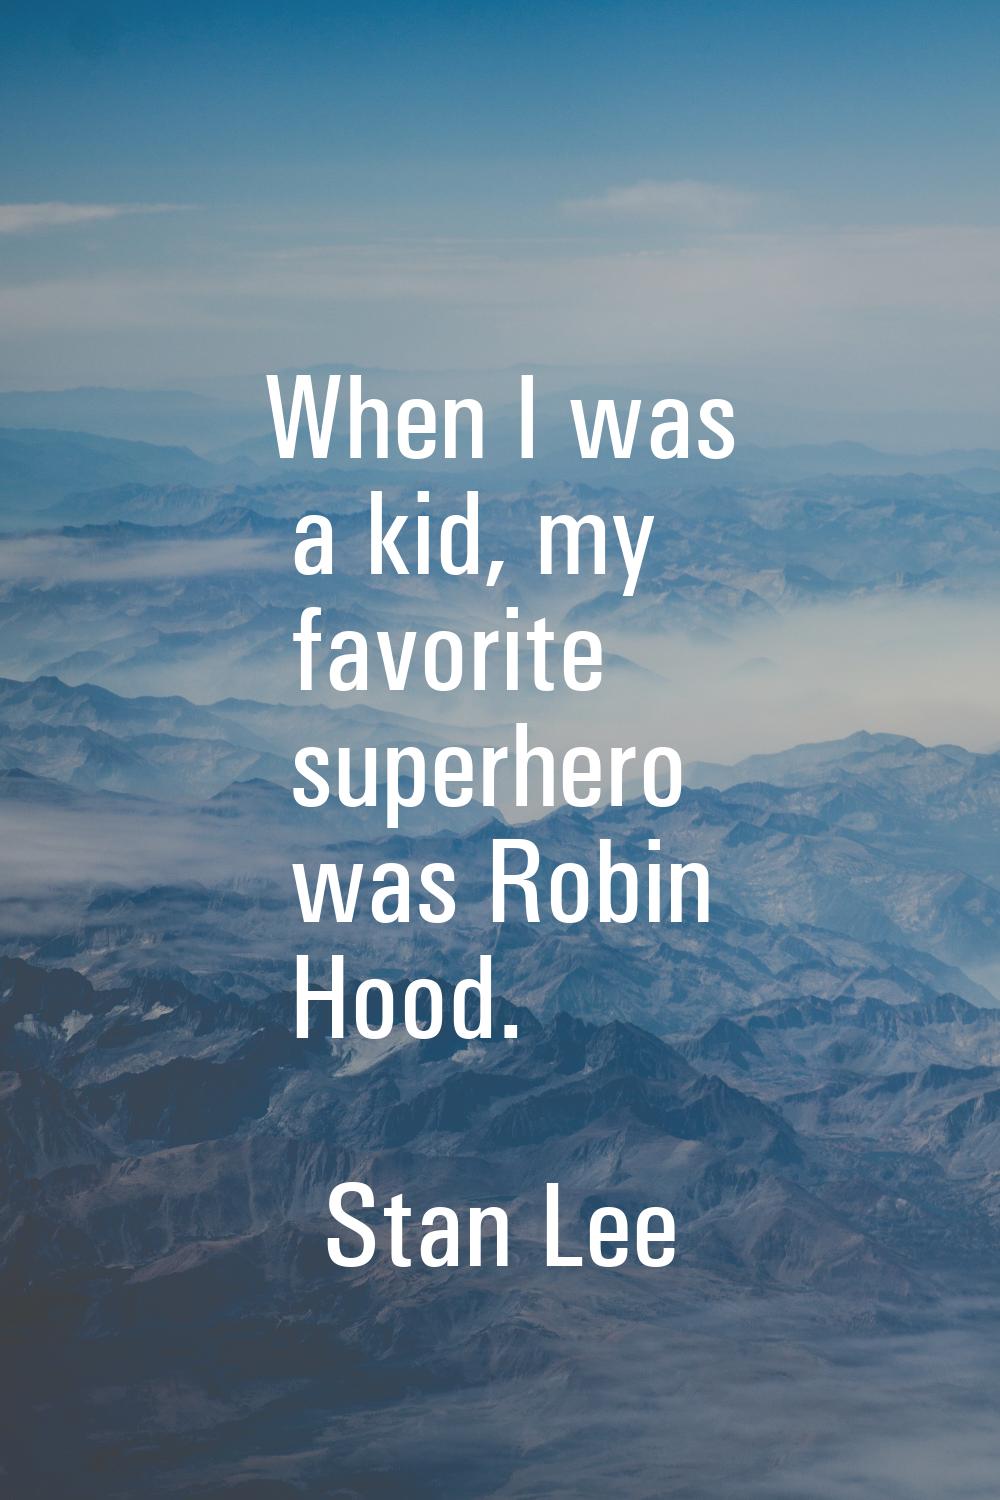 When I was a kid, my favorite superhero was Robin Hood.